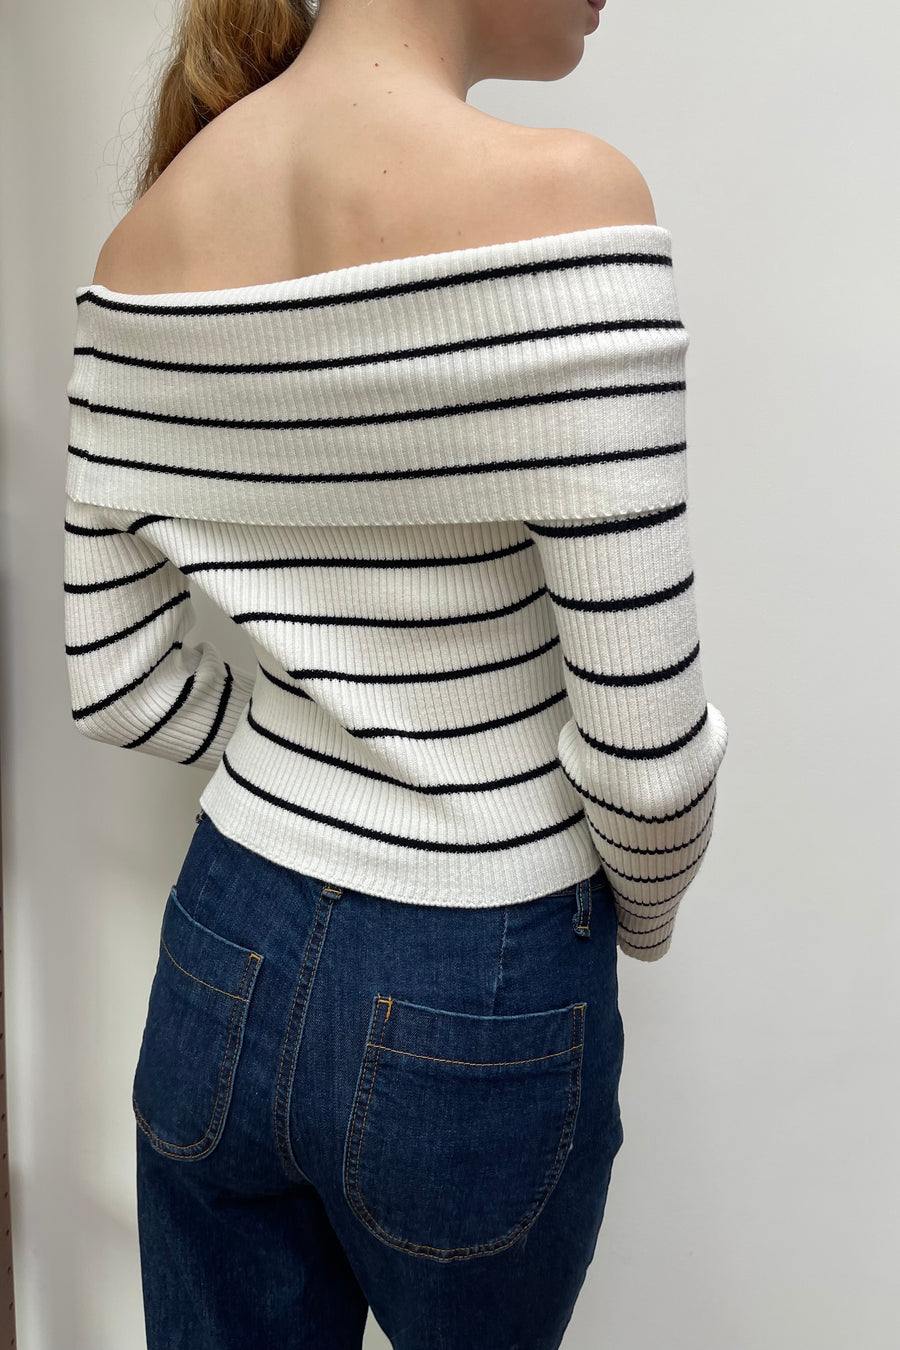 White with black stripes off shoulder top